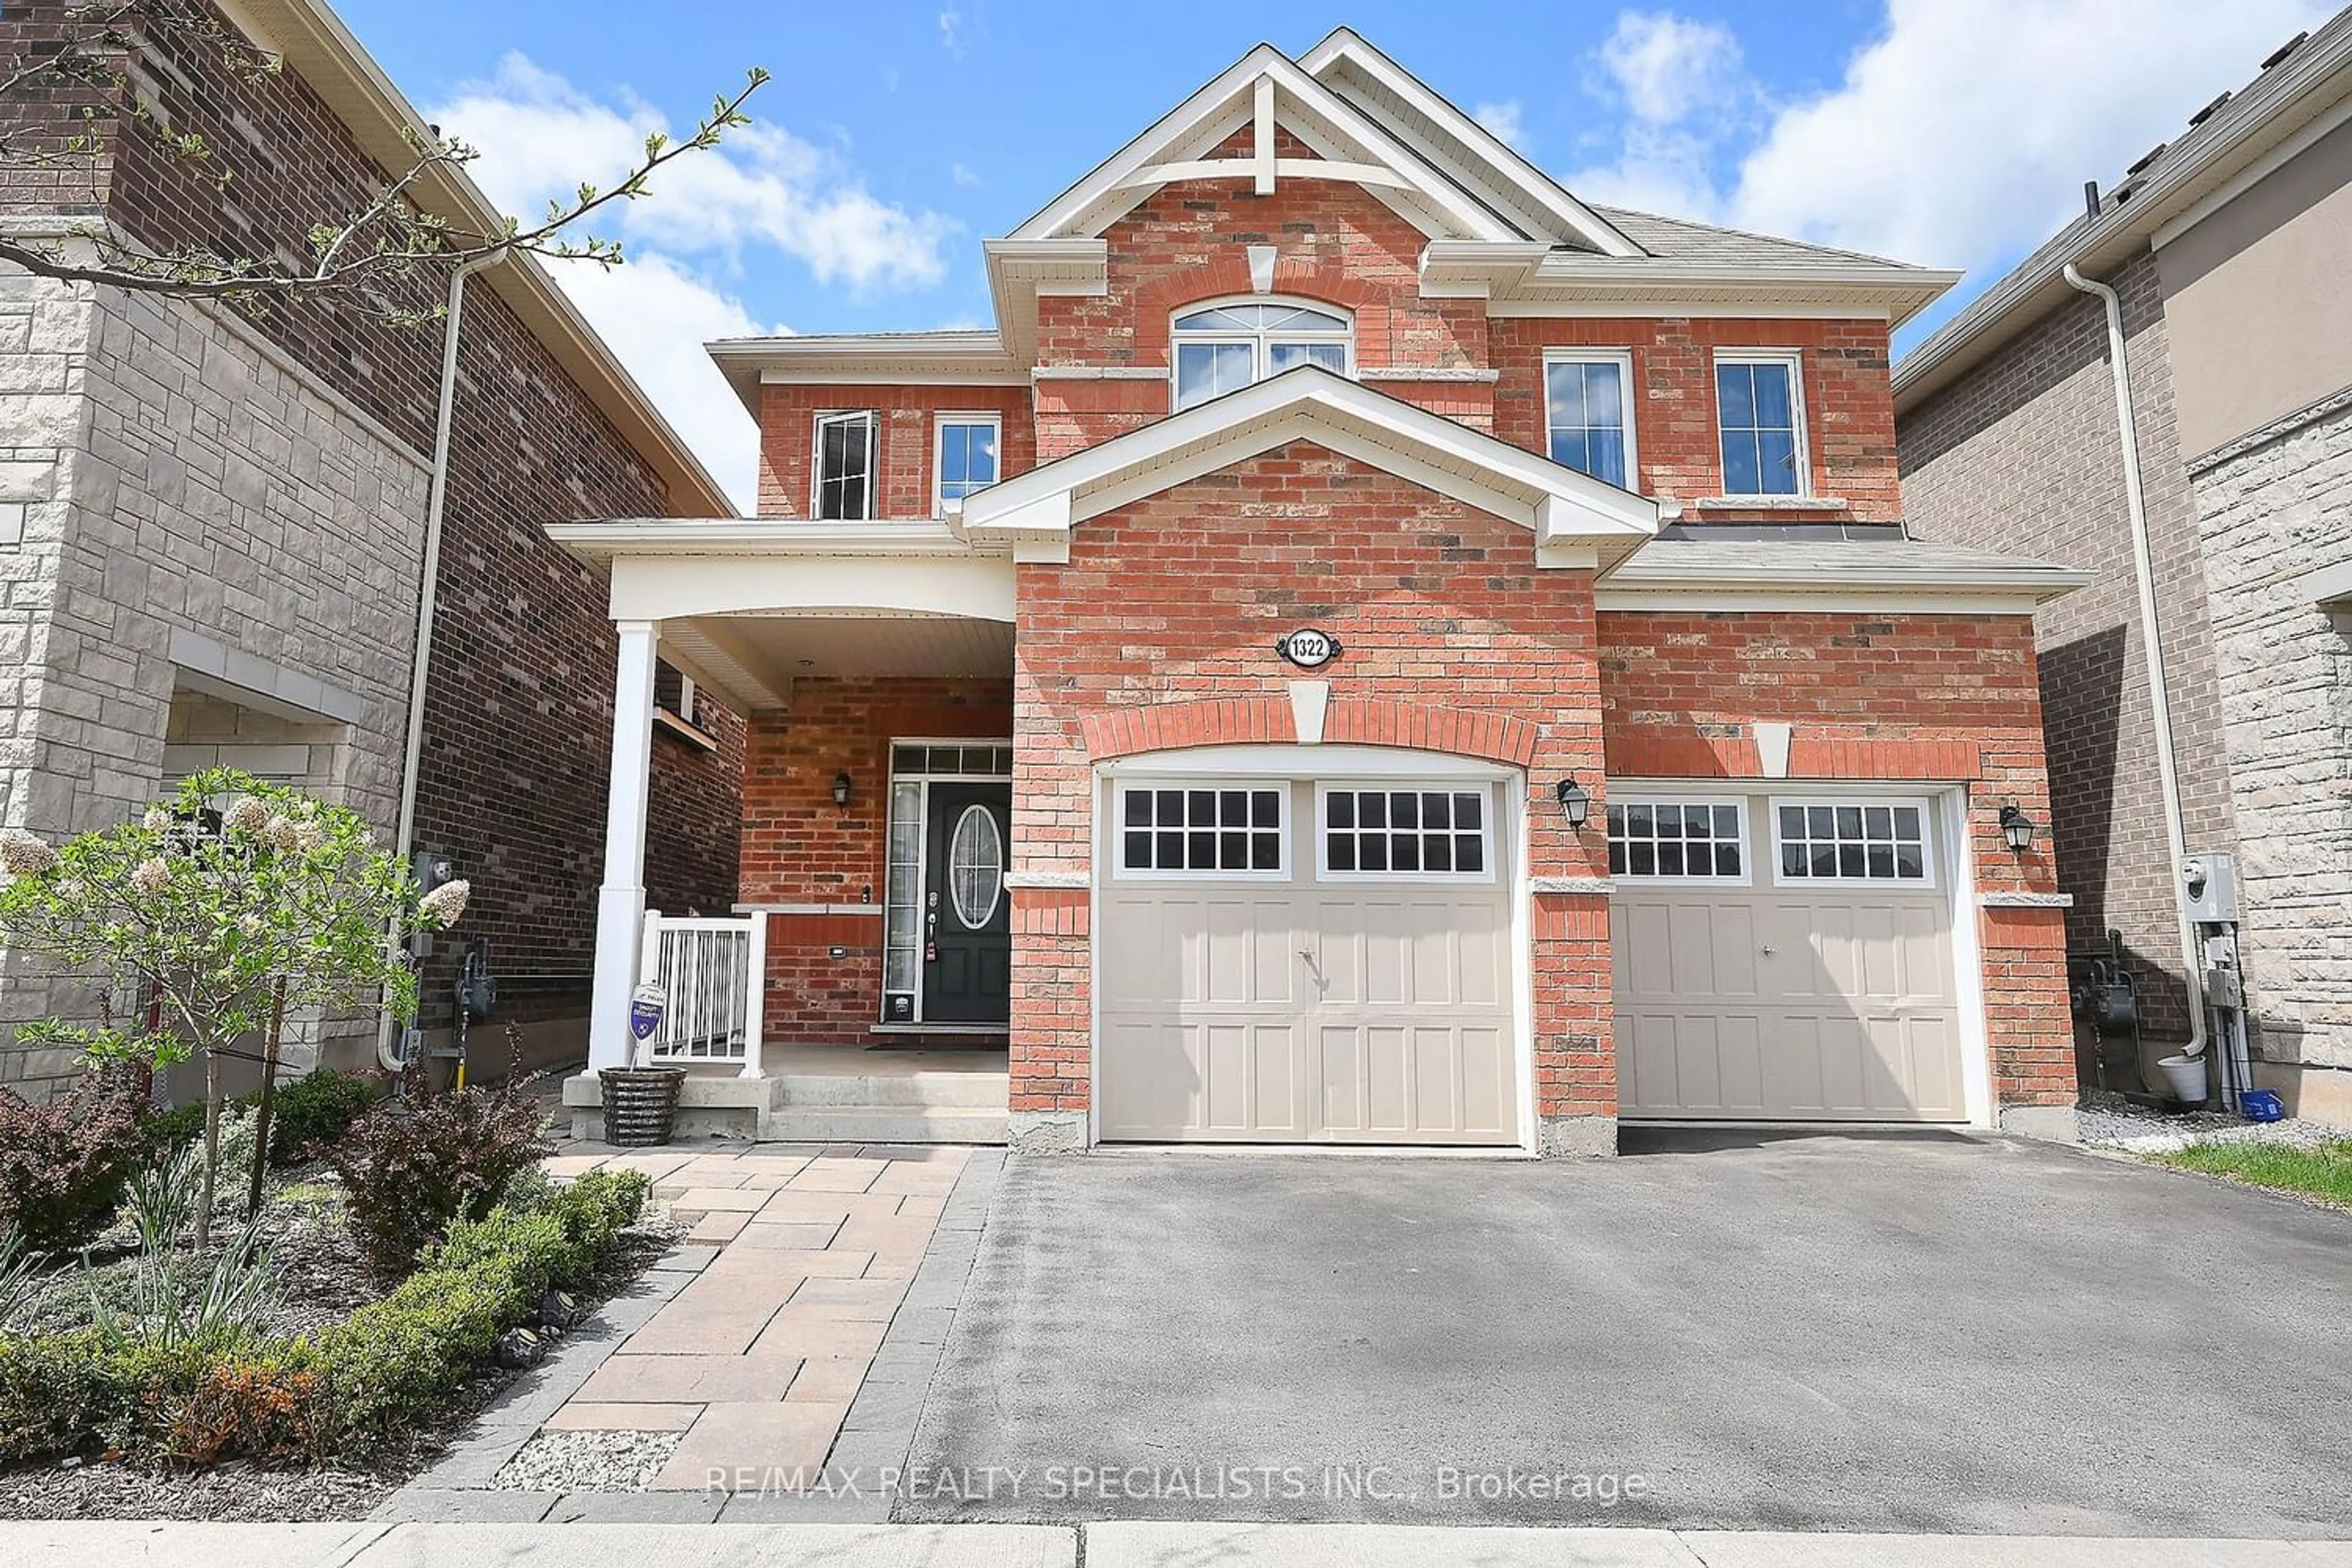 Home with brick exterior material for 1322 Orr Terr, Milton Ontario L9E 0B7